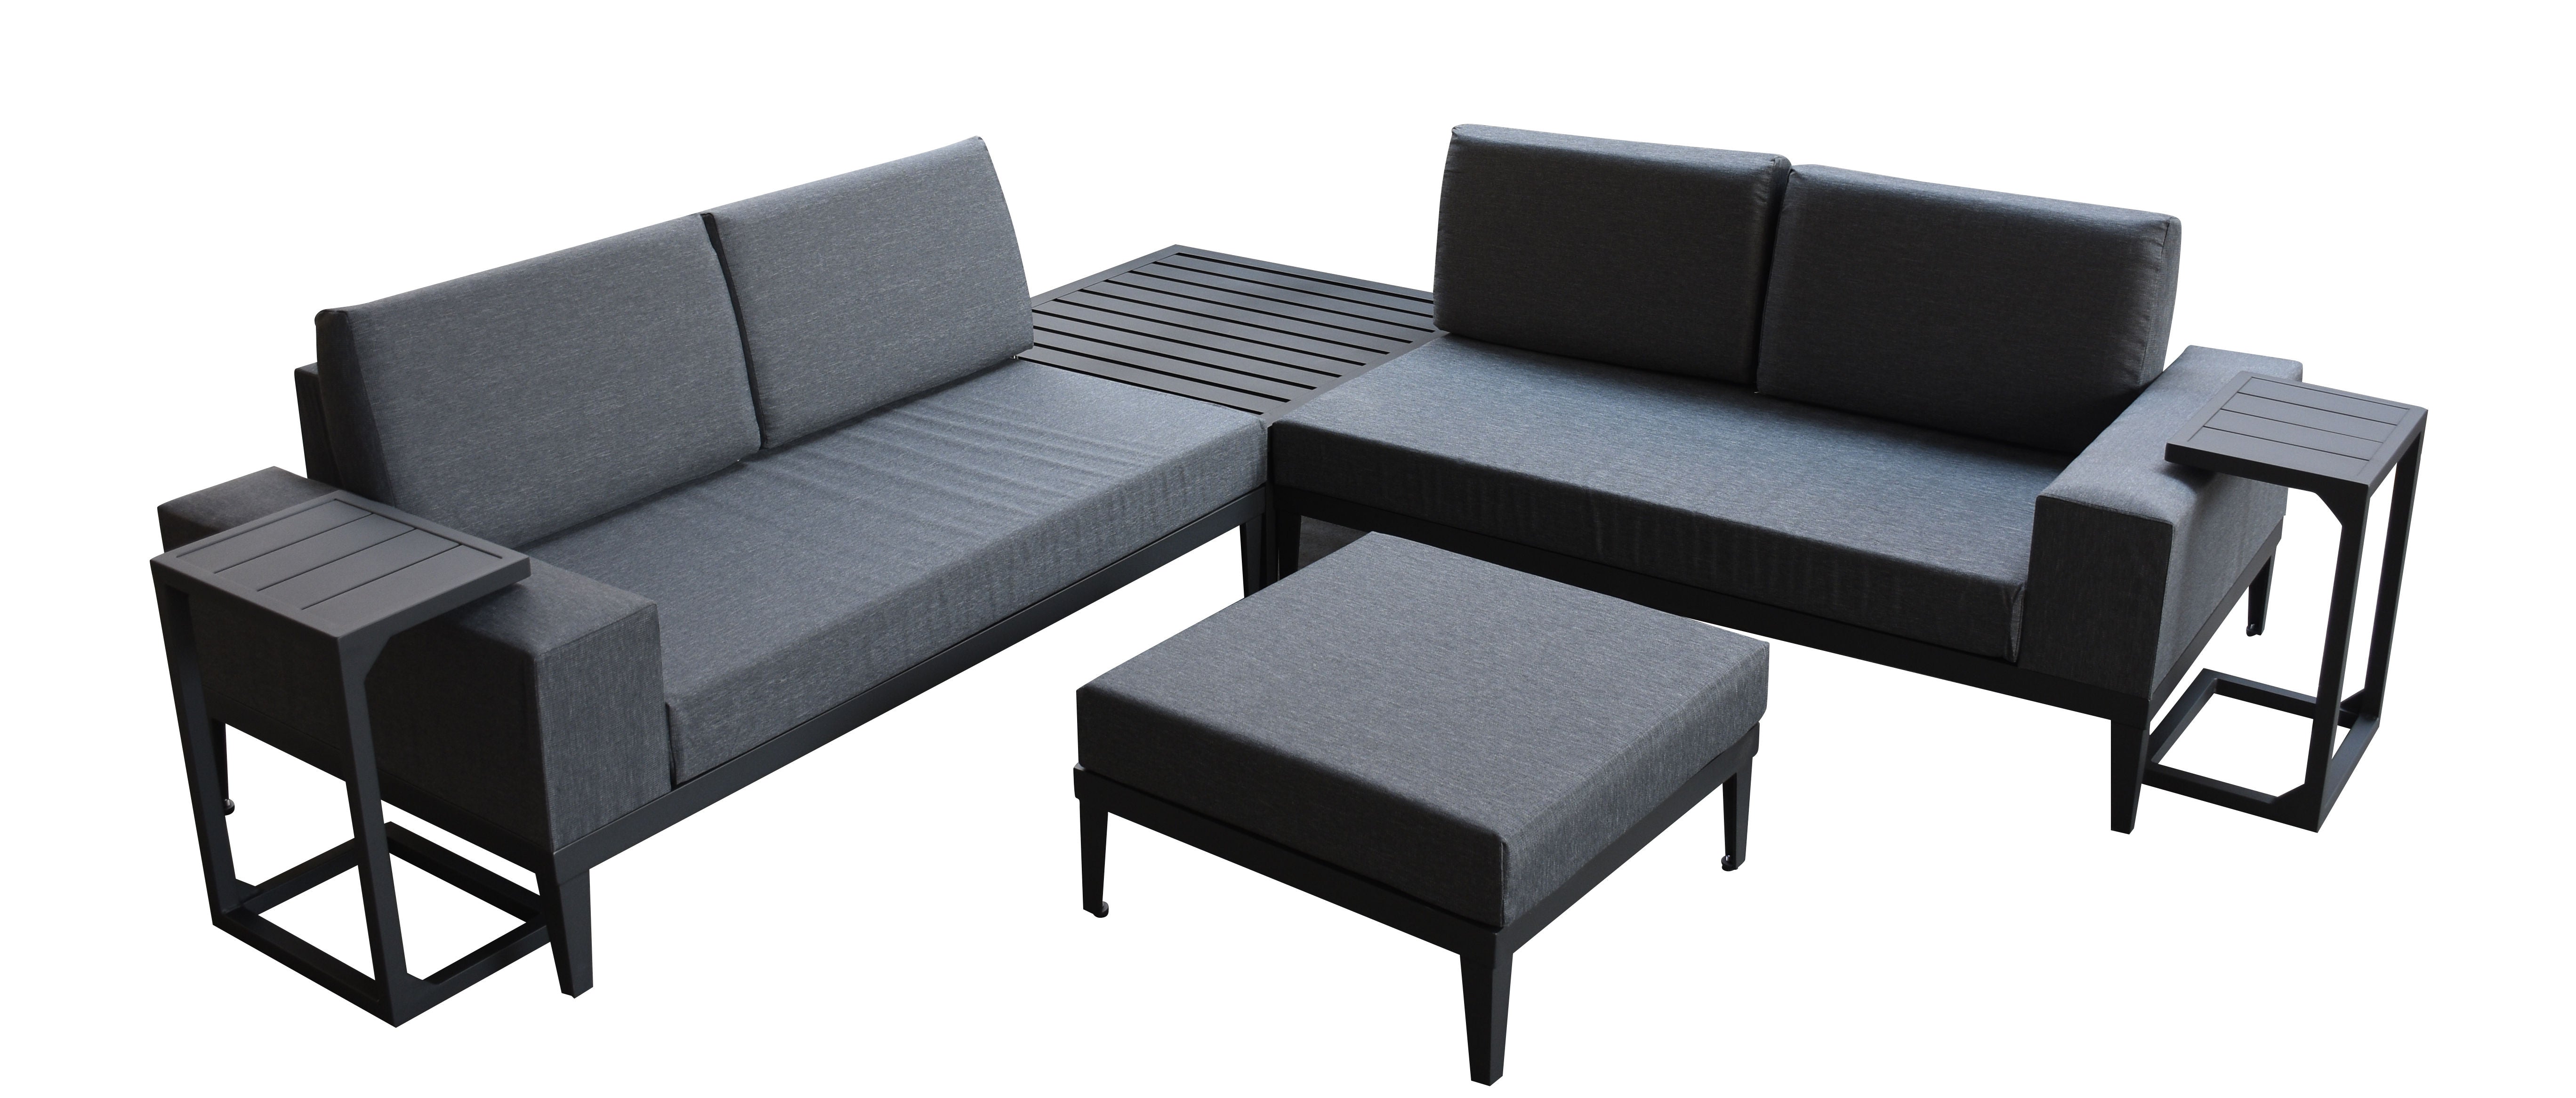 PatioZone 6Pcs Conversation Set 4" Quick-Dry Textilene/Olefin Cushions and Aluminum Frame (MOSS-0829NC) - Black / Grey